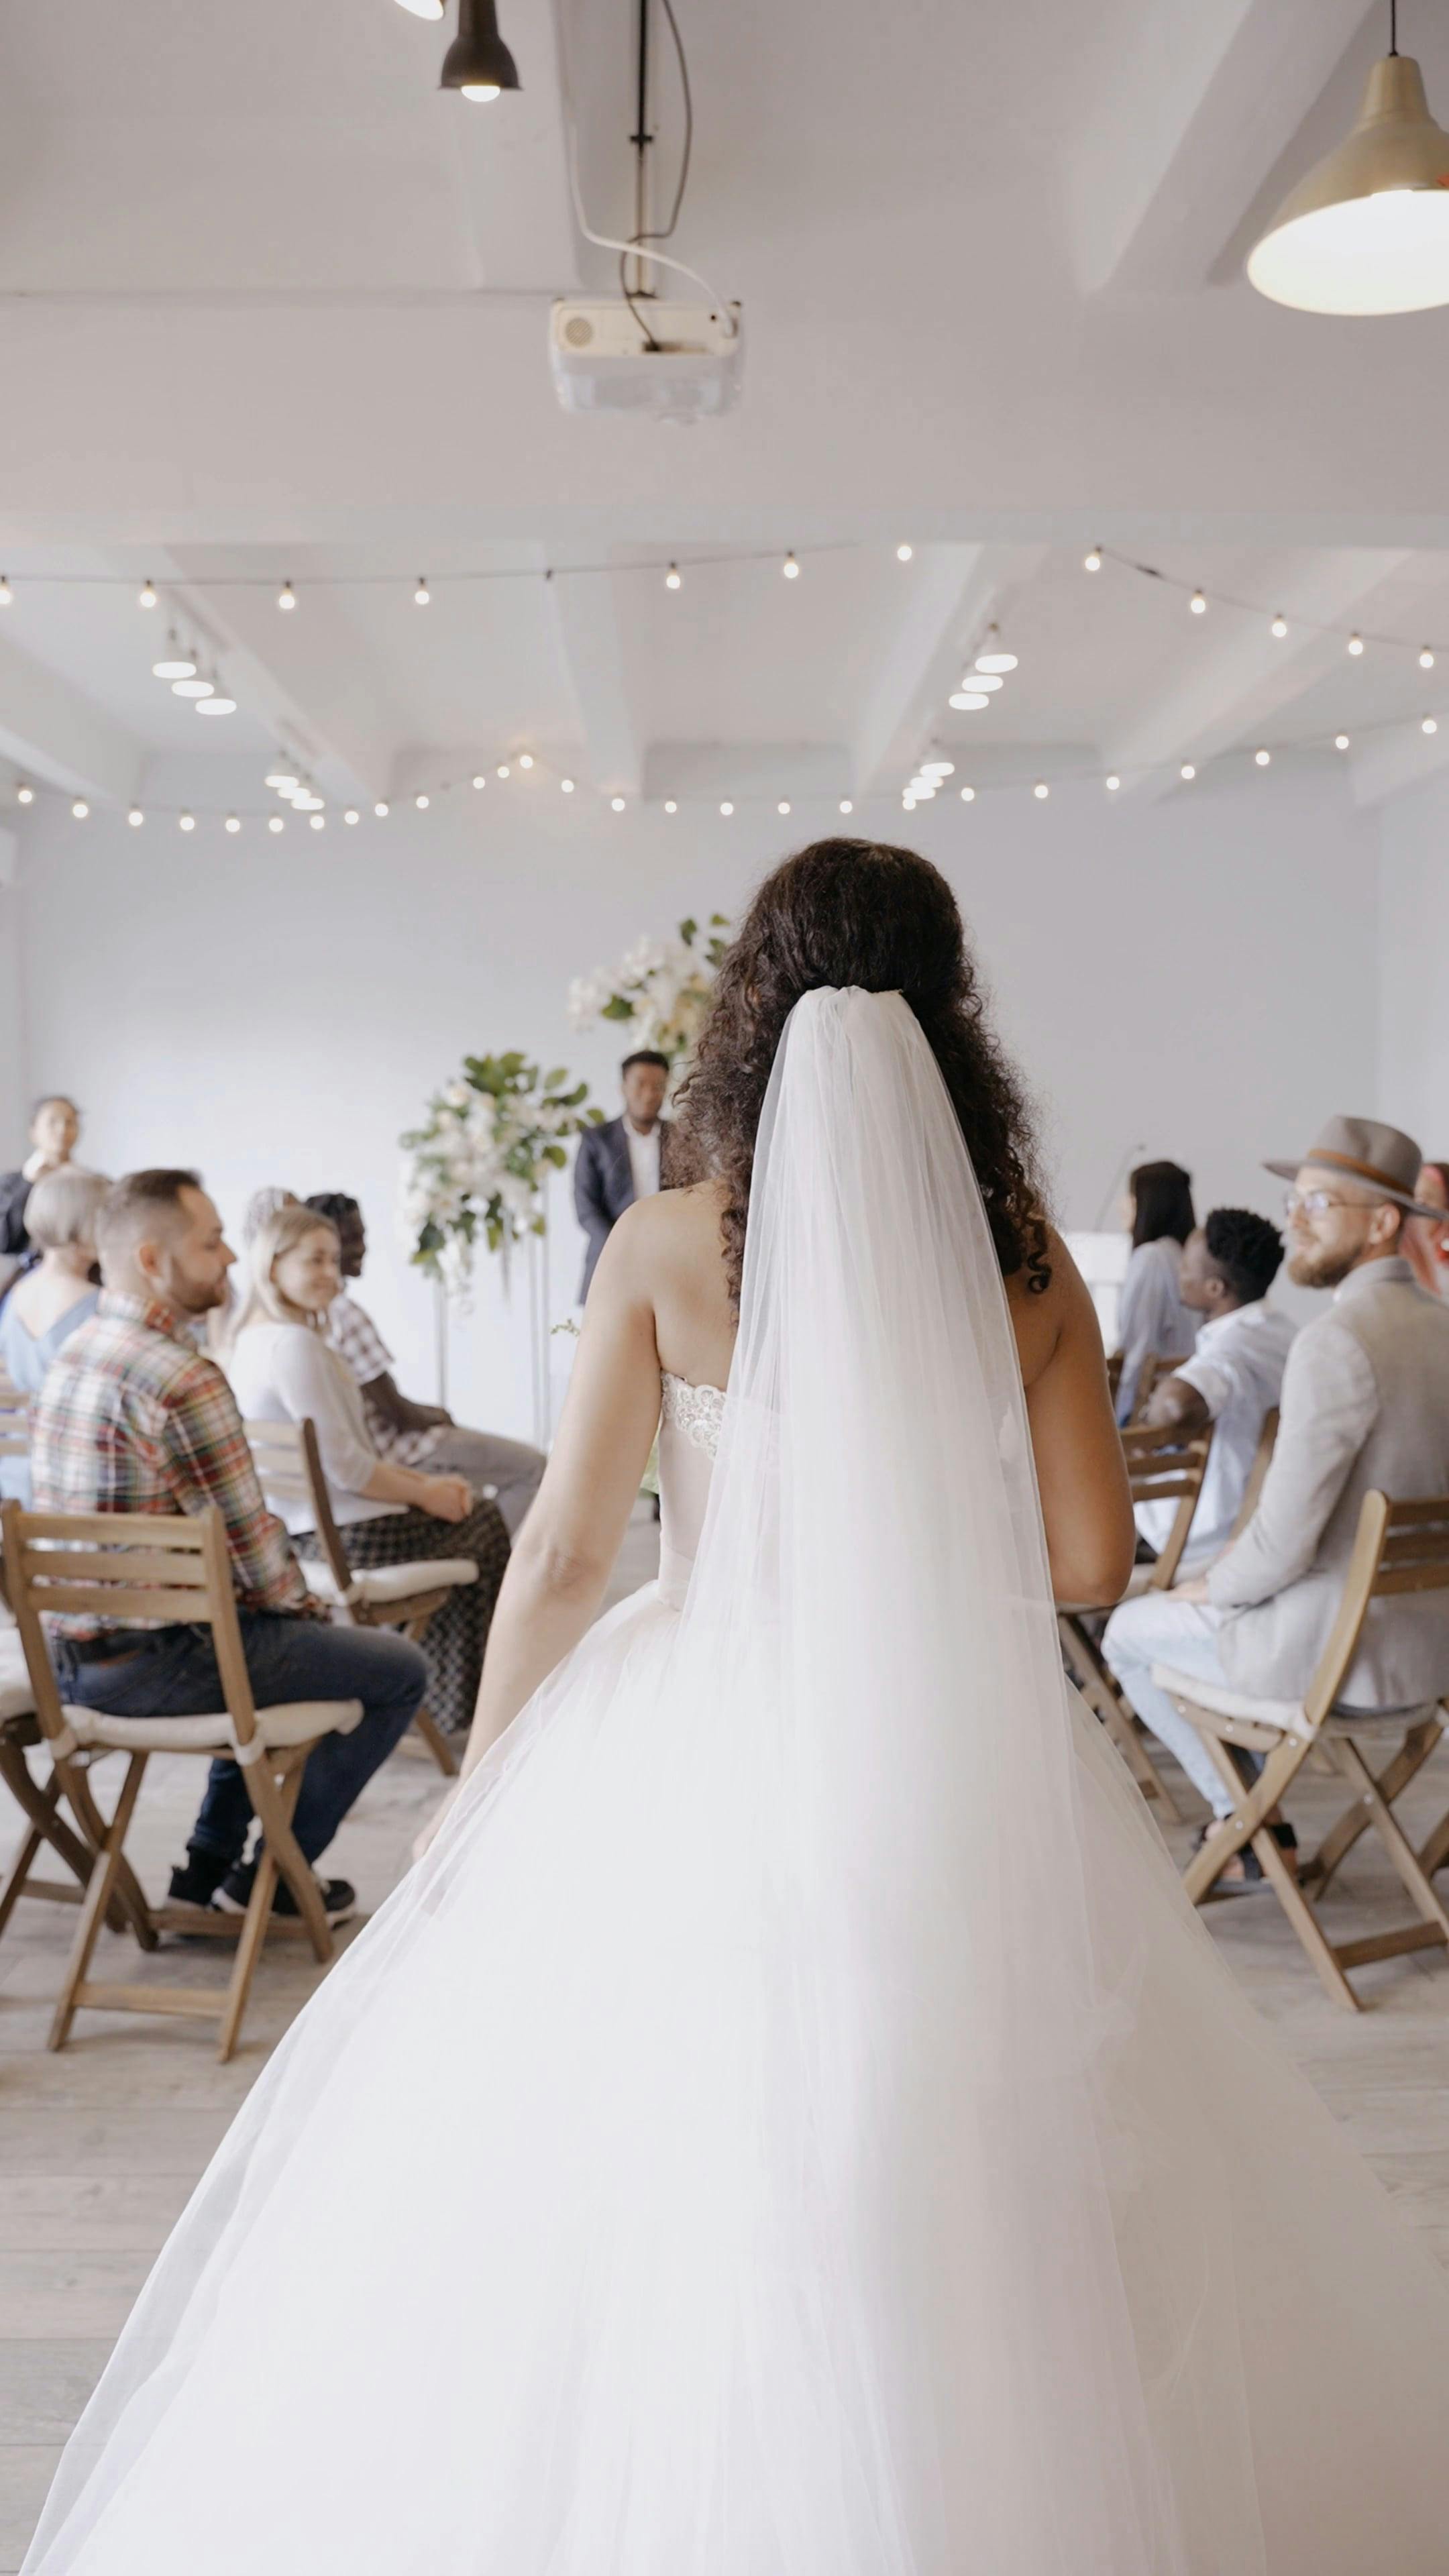 Singer Teni dazzles in luxurious wedding gown [Video]